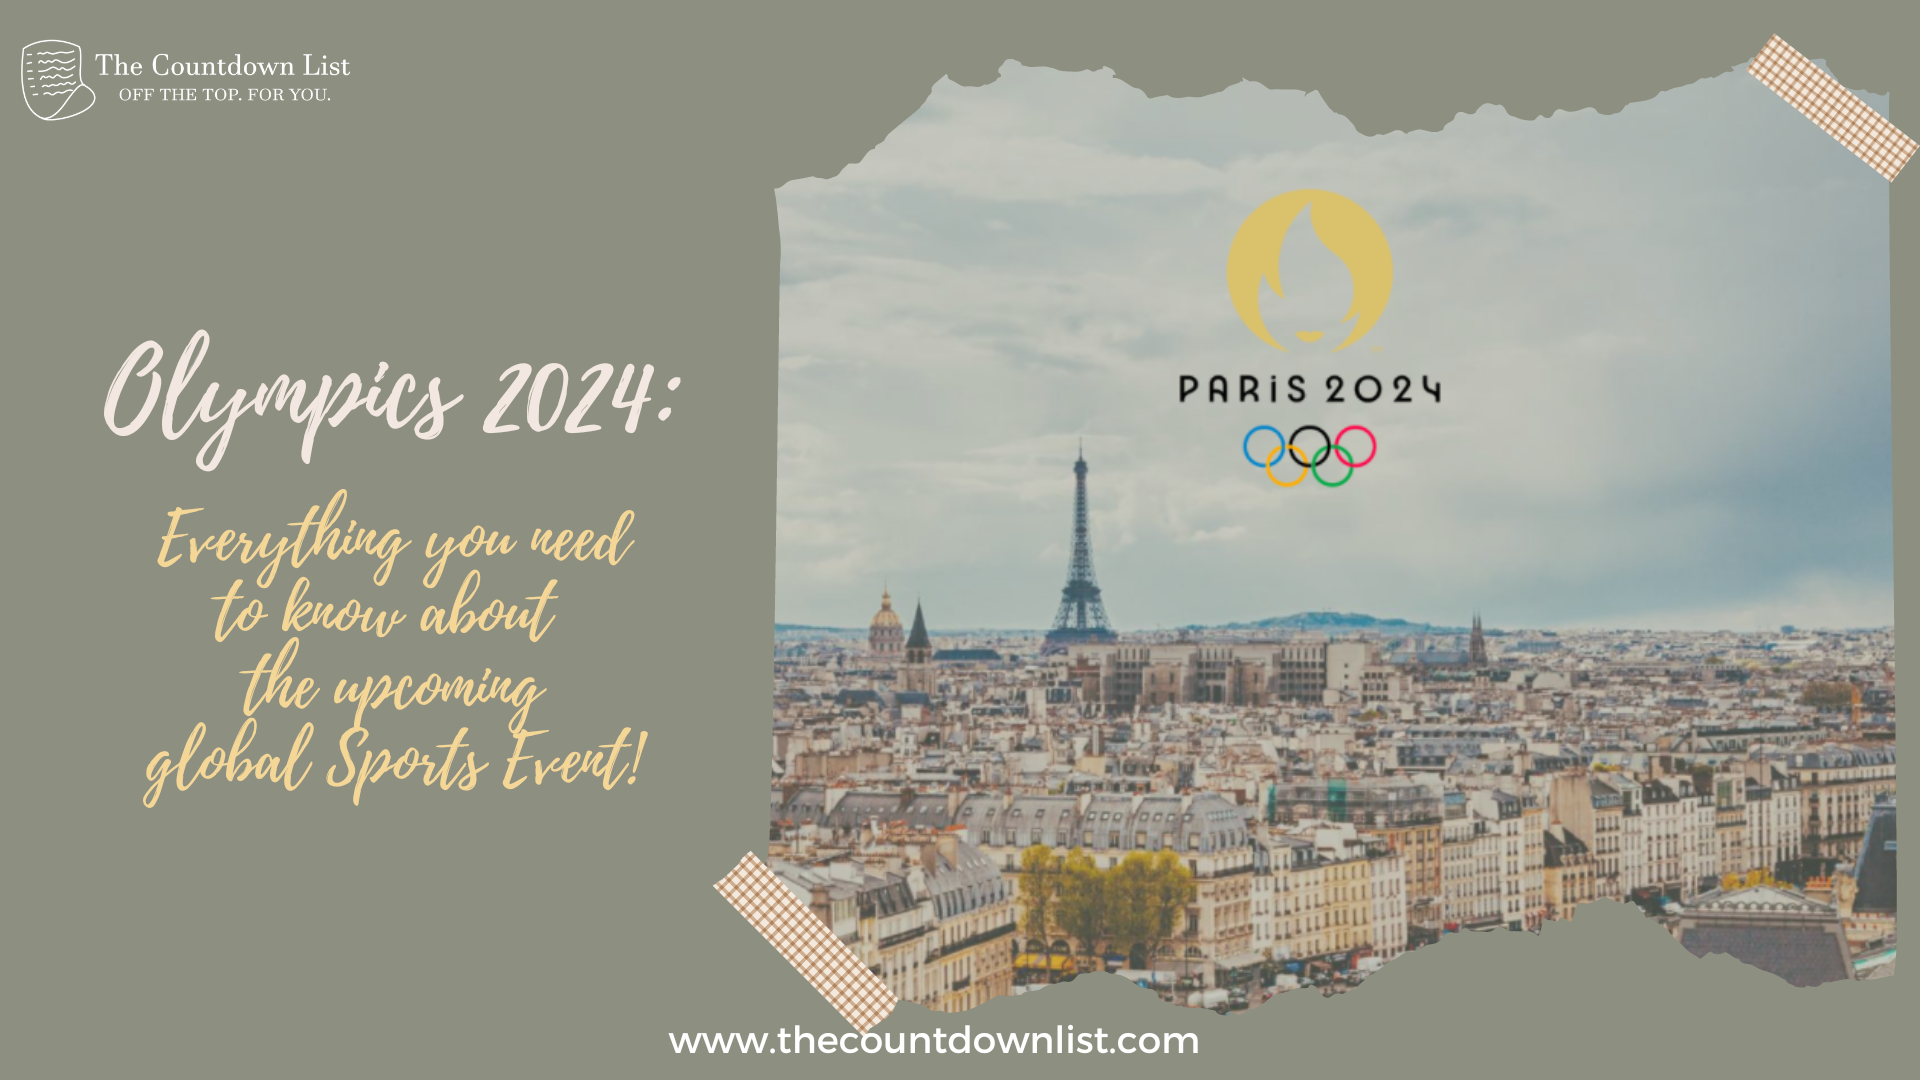 Olympics 2024 - Paris